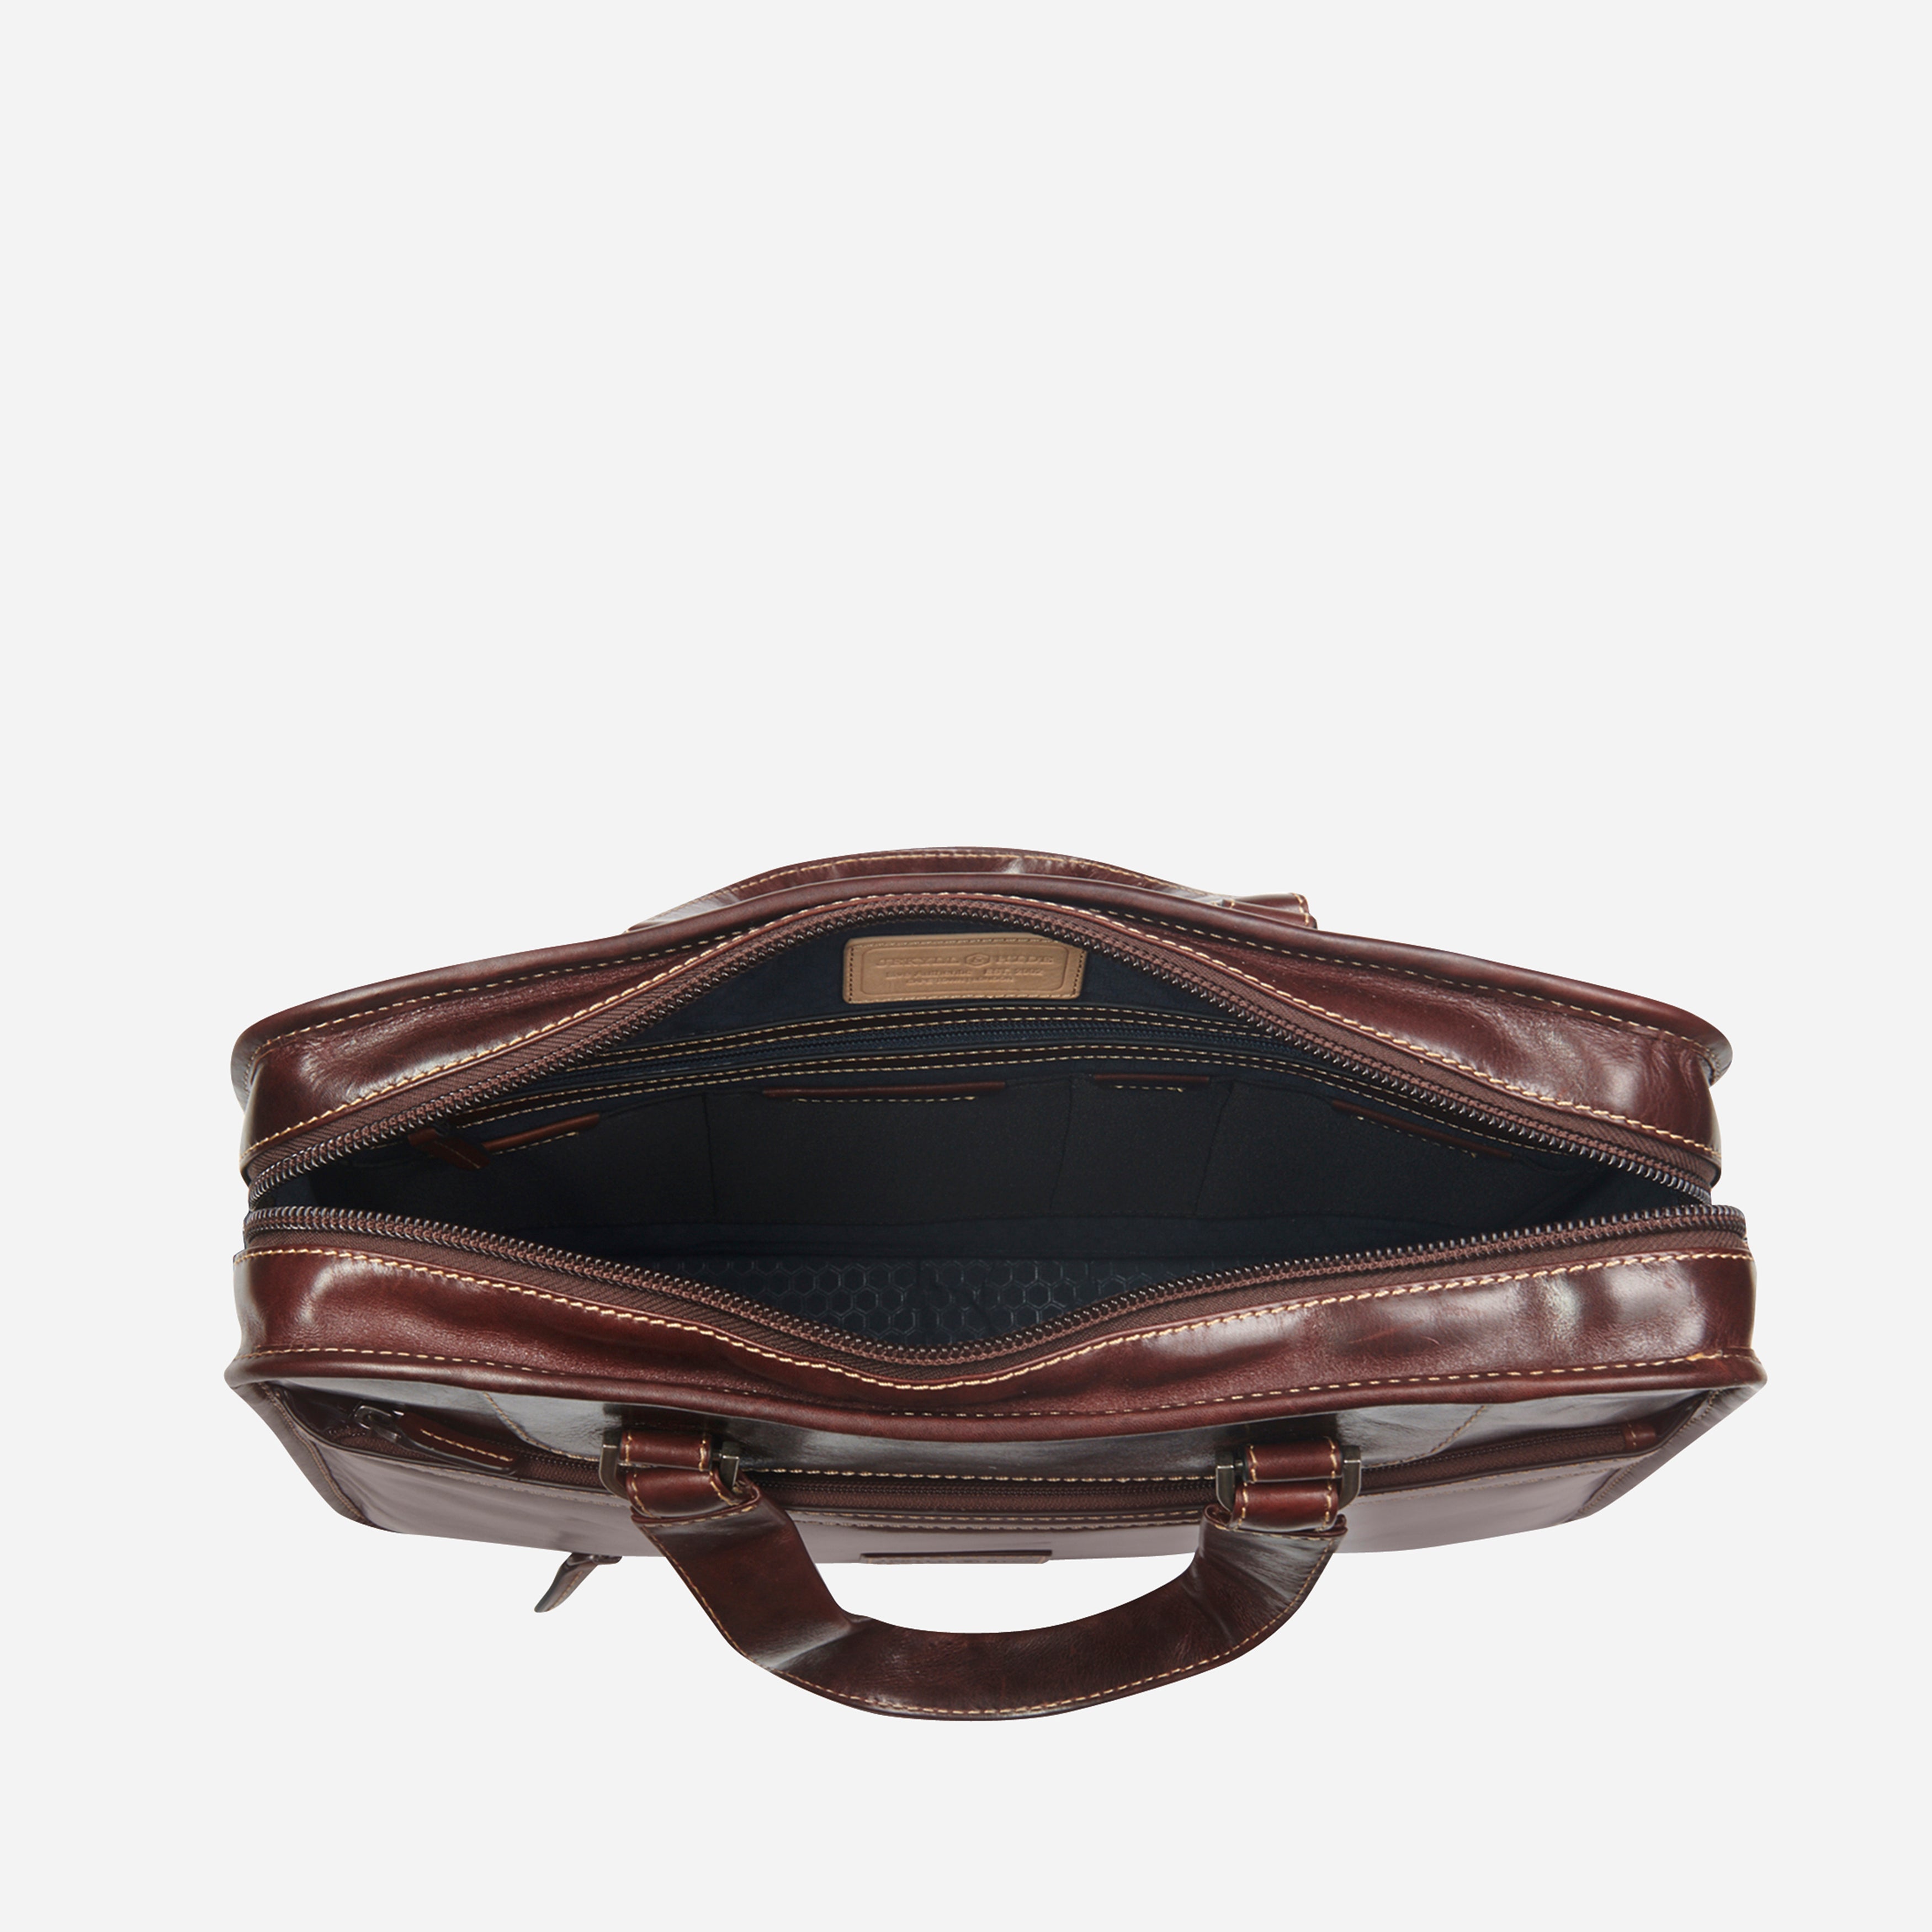 Oxford Medium Leather 15" Laptop Briefcase, Espresso